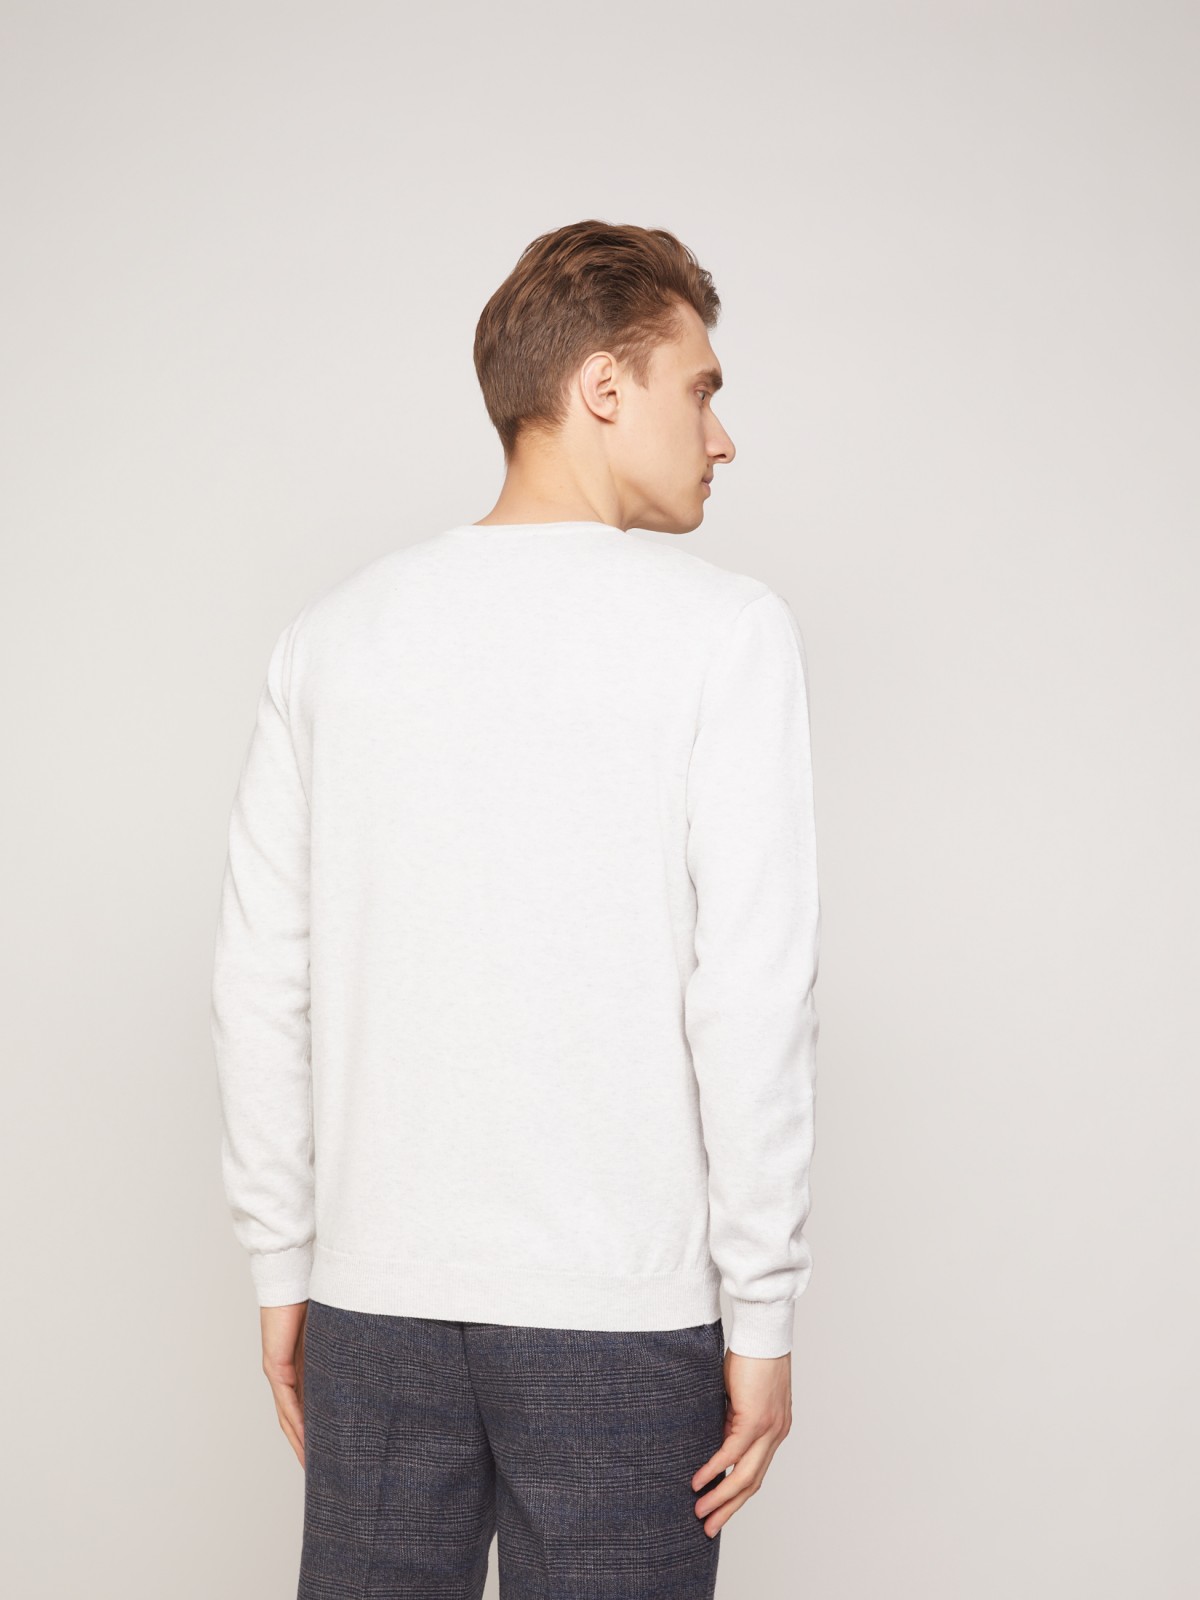 Пуловер из хлопка zolla 011336123032, цвет светло-серый, размер S - фото 5